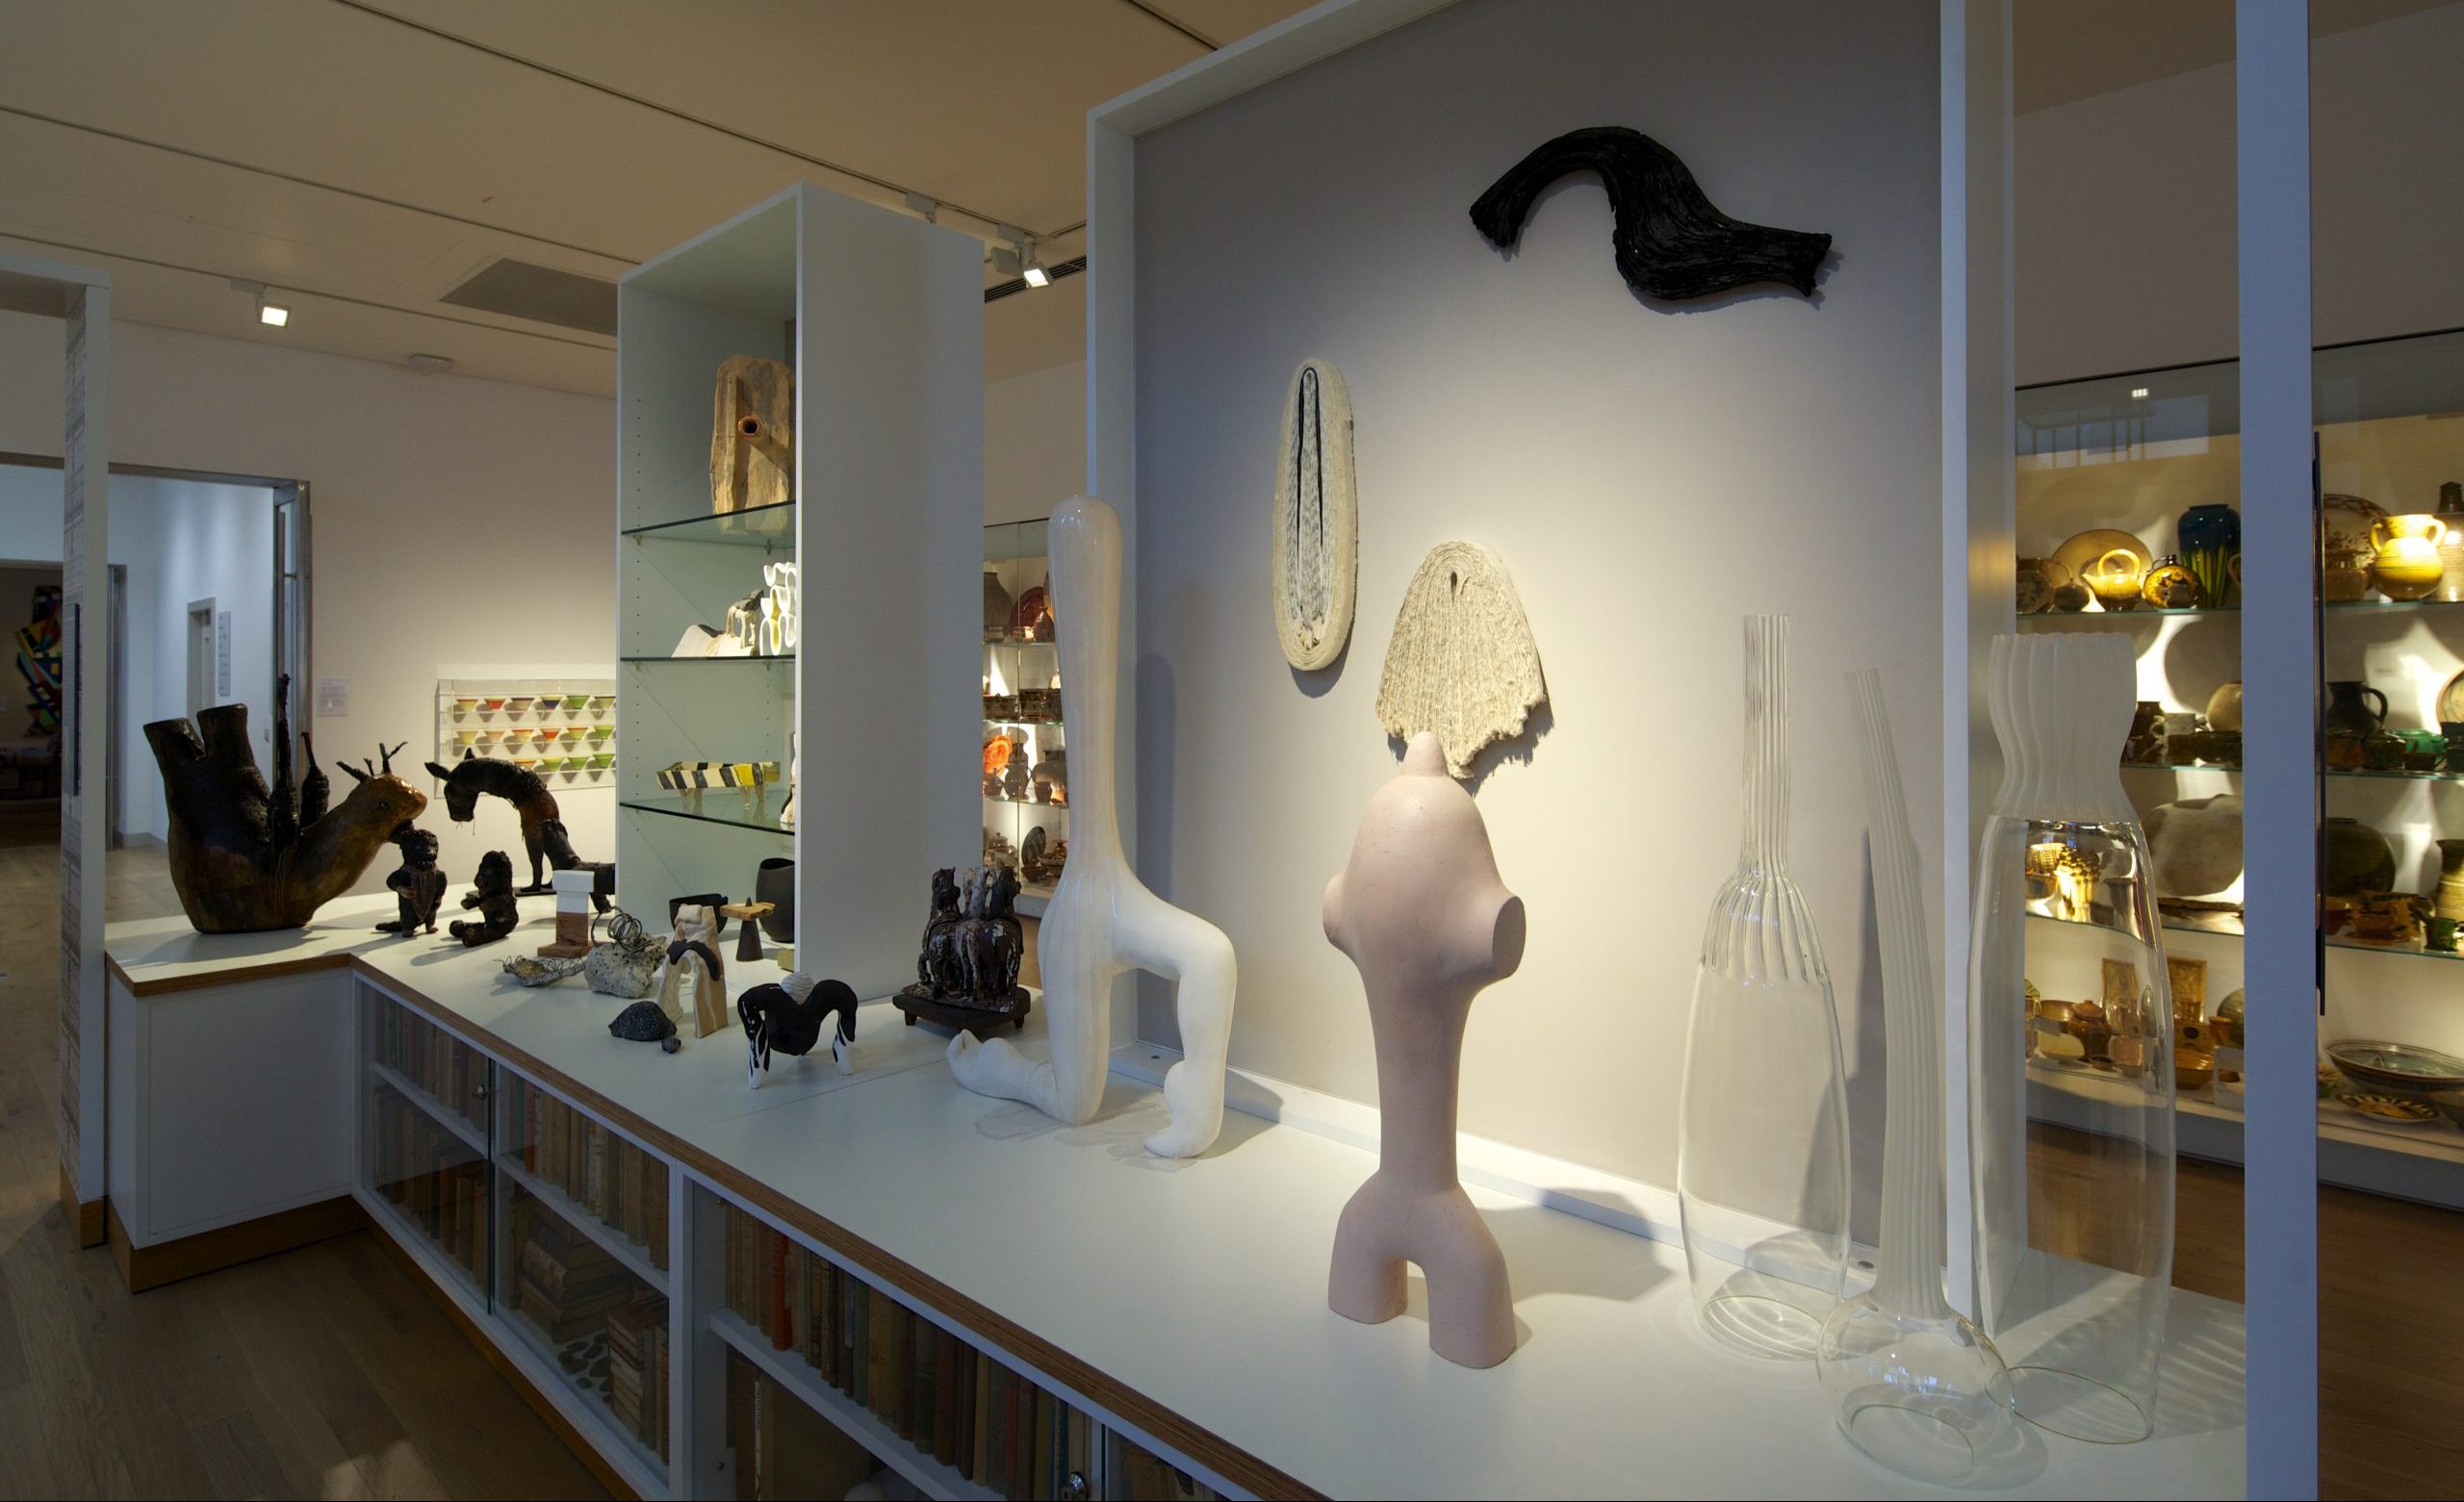 The ceramics gallery at York Art Gallery